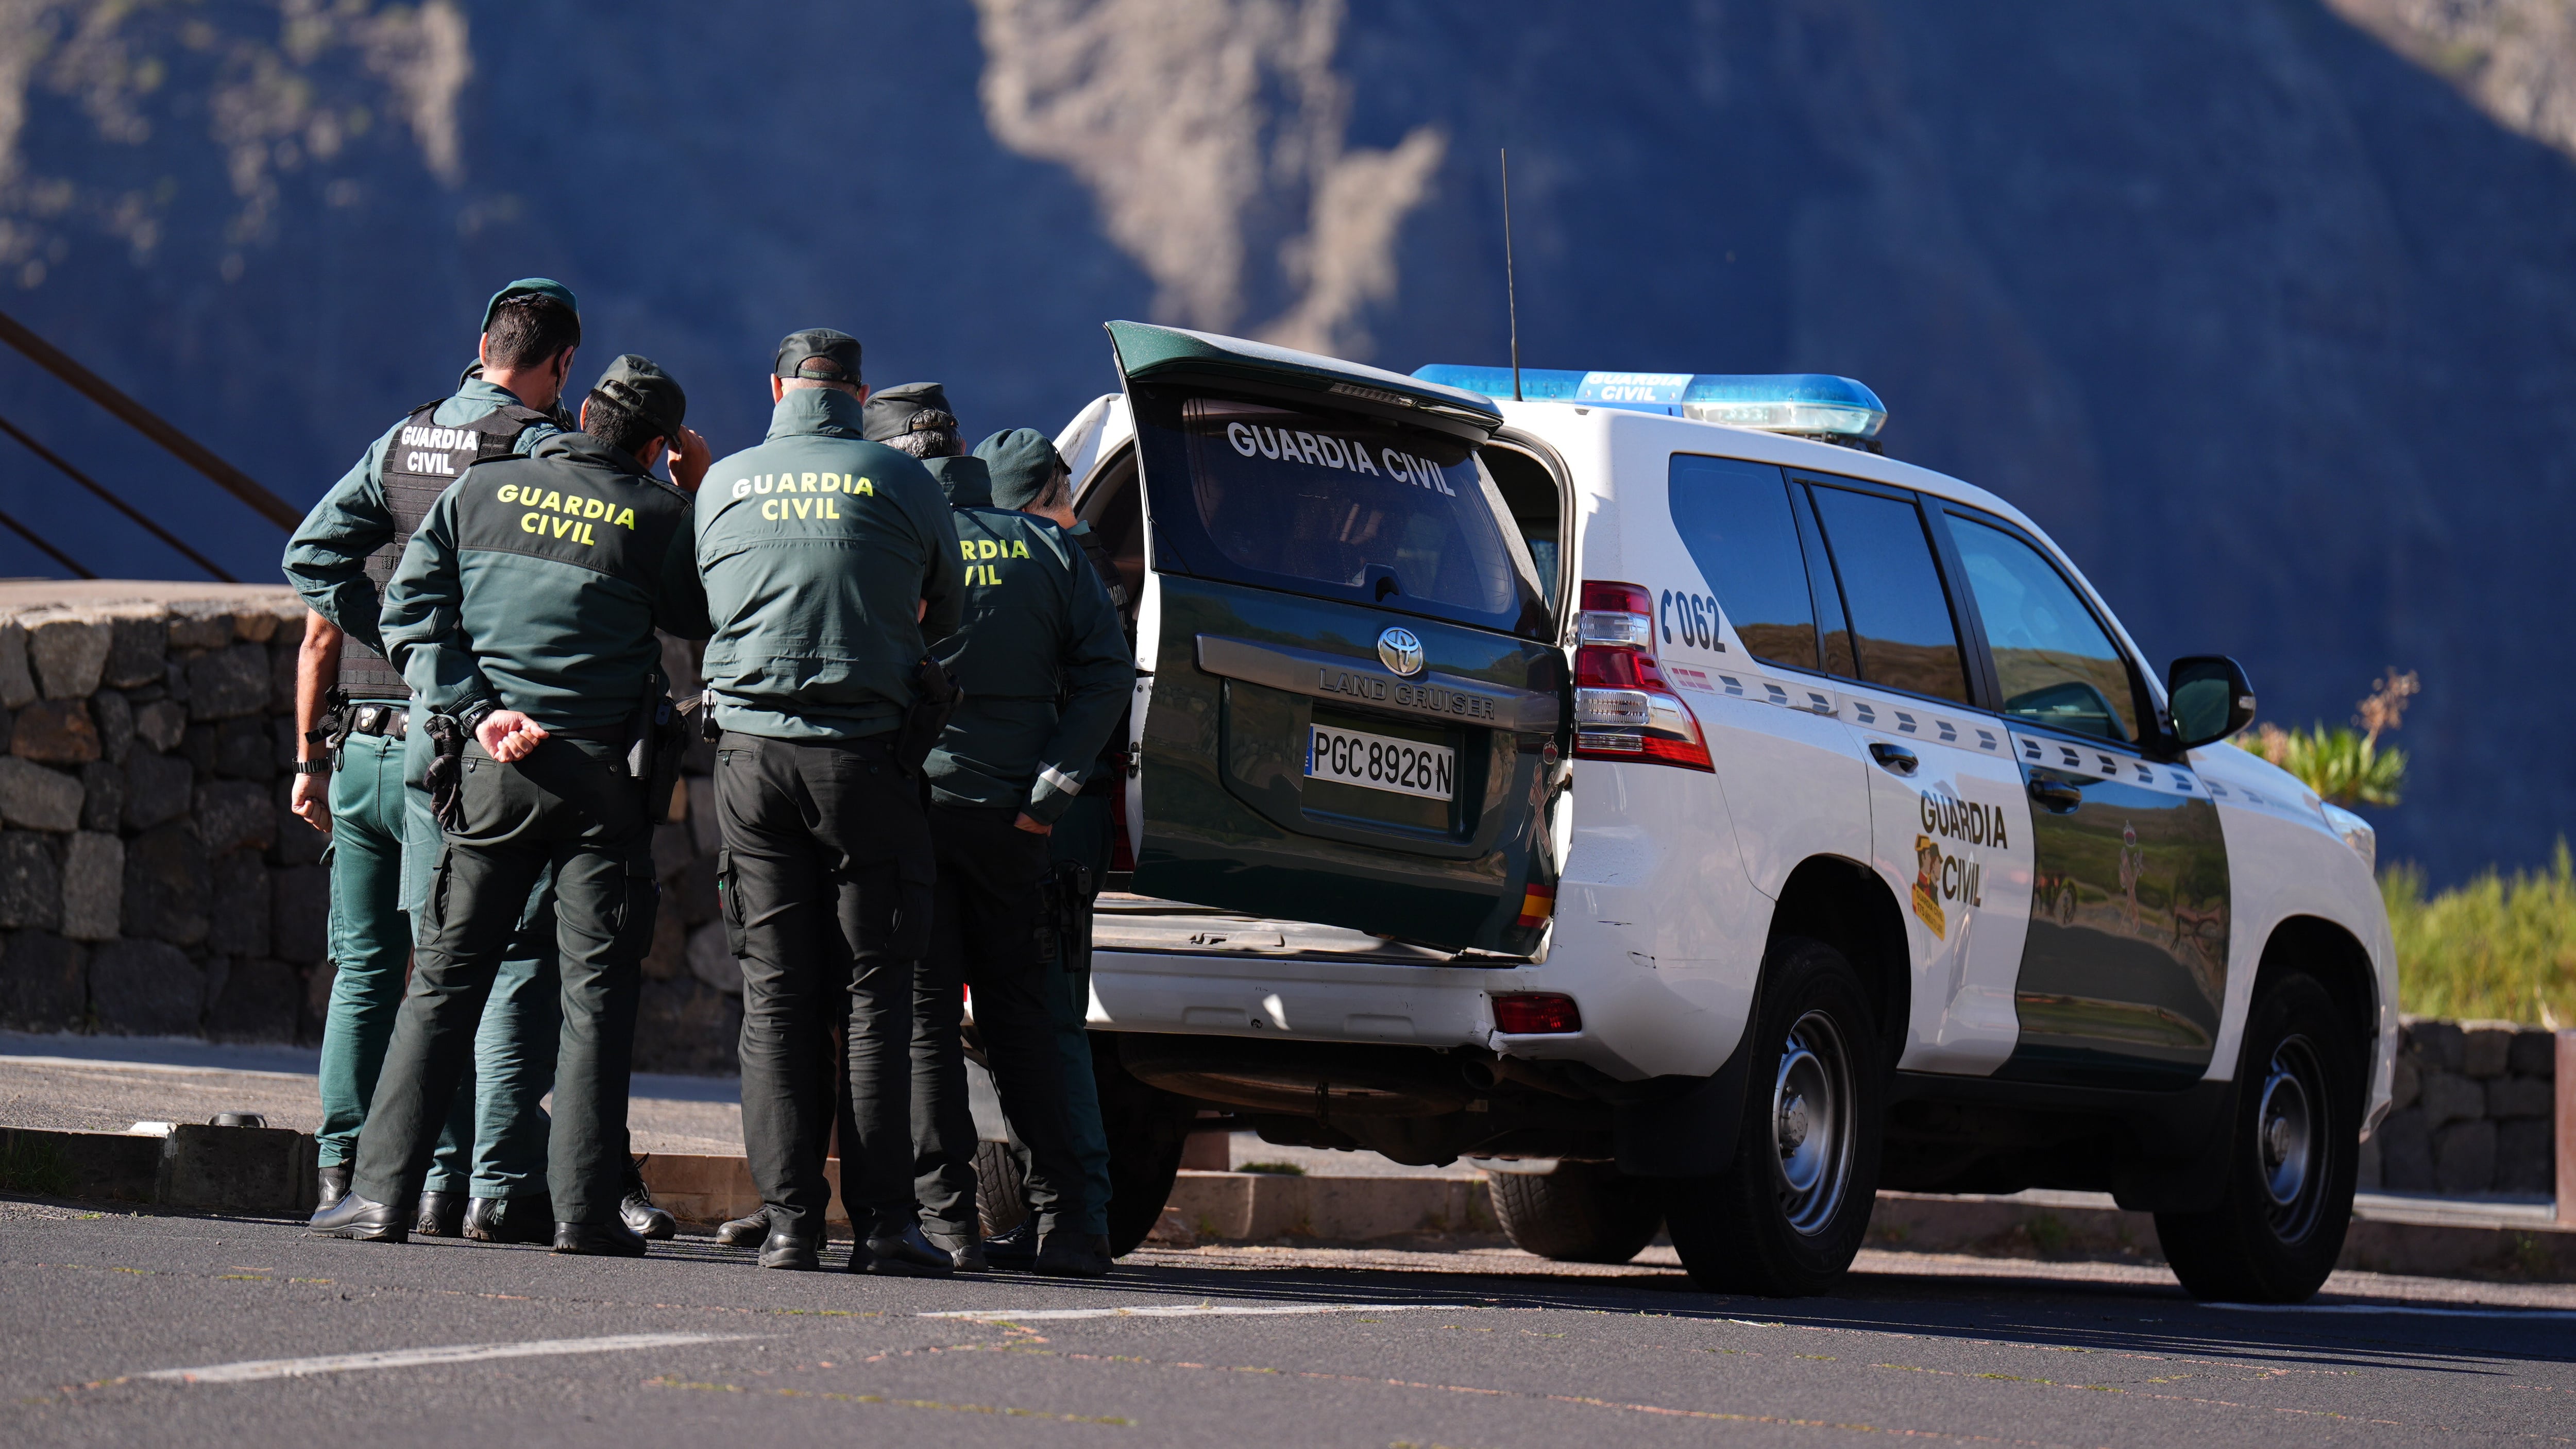 Guardia Civil officers near the village of Masca, Tenerife